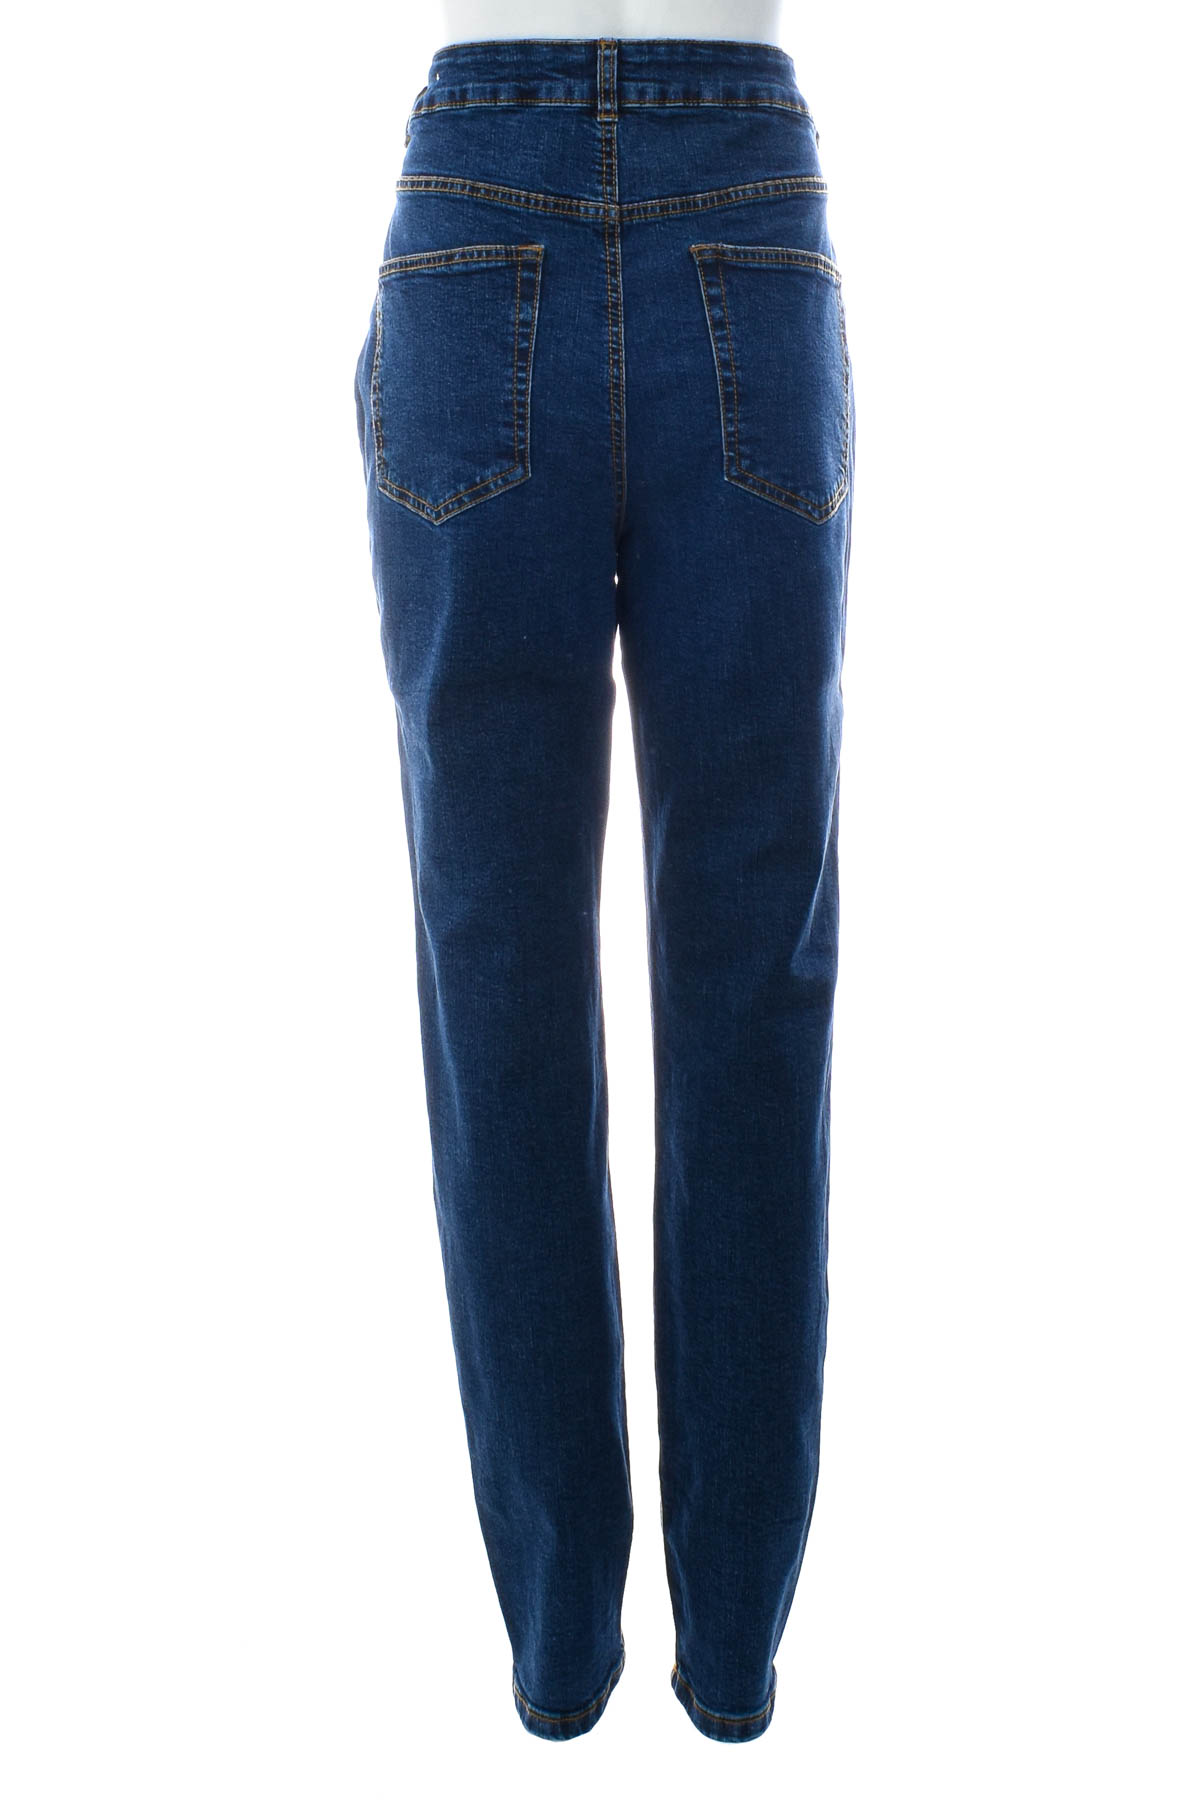 Women's jeans - Suzy Shier - 1